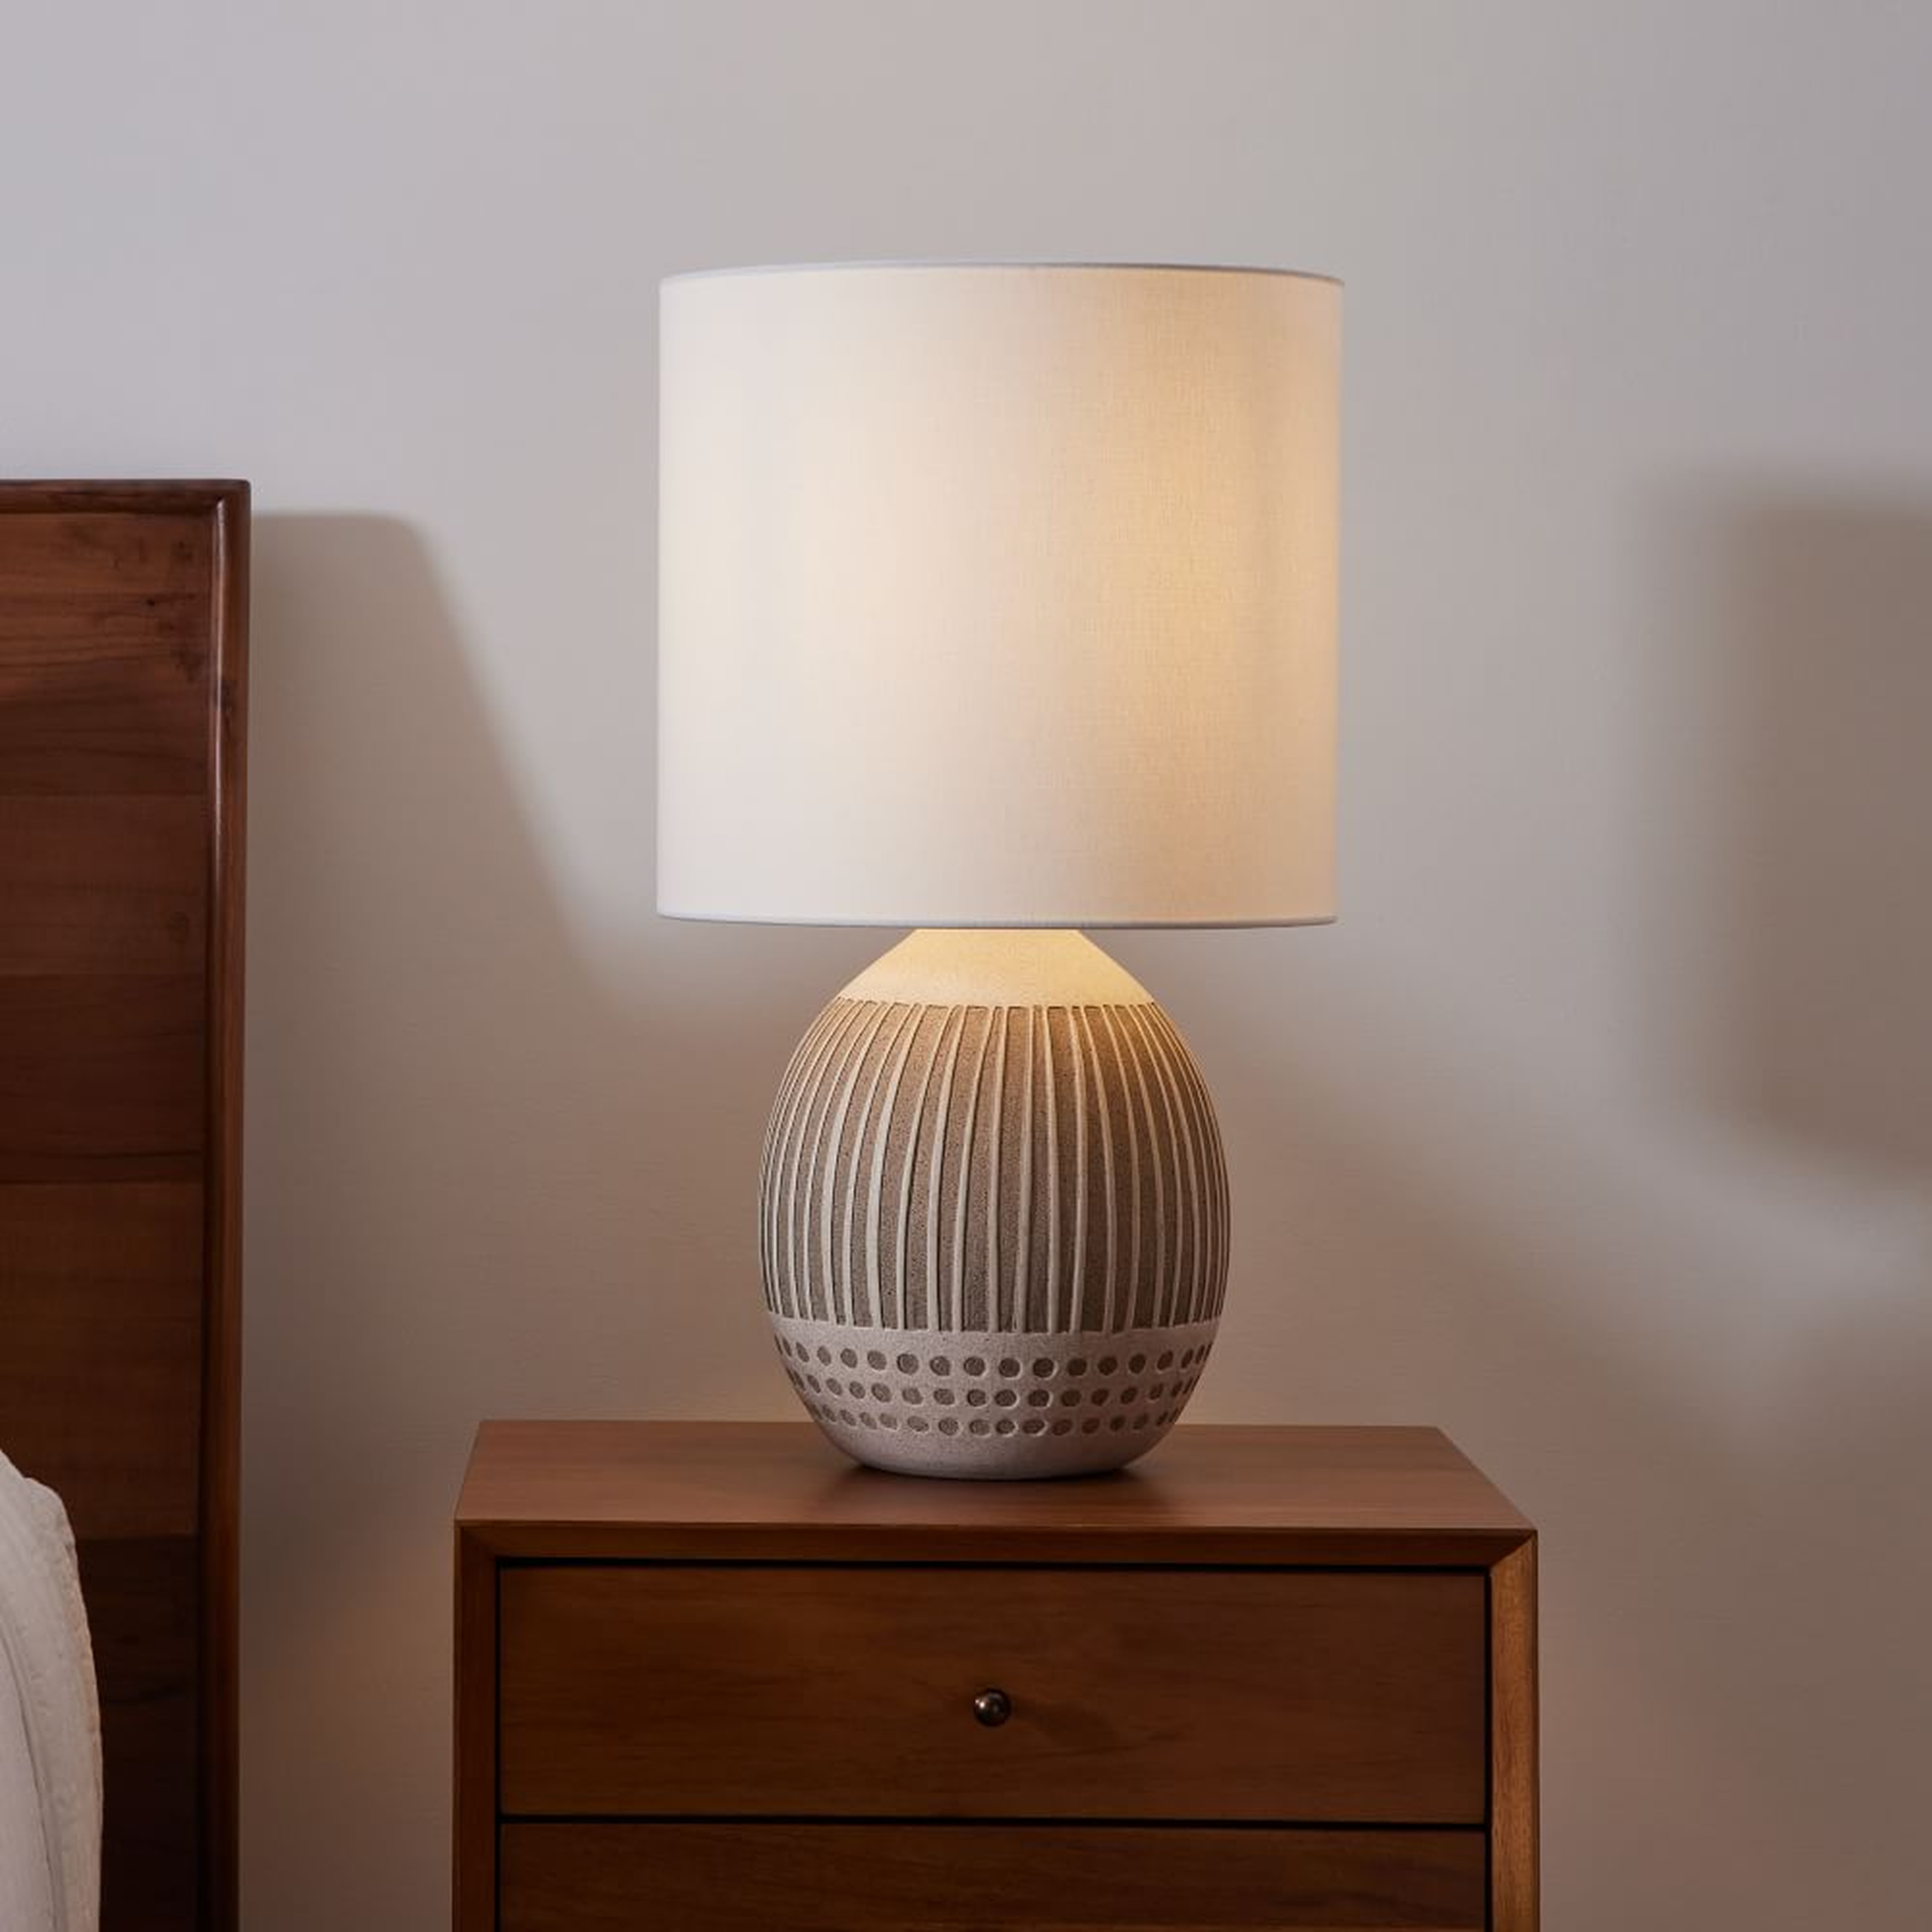 Mojave Ceramic Table Lamp, 21.5", White & Sand - West Elm